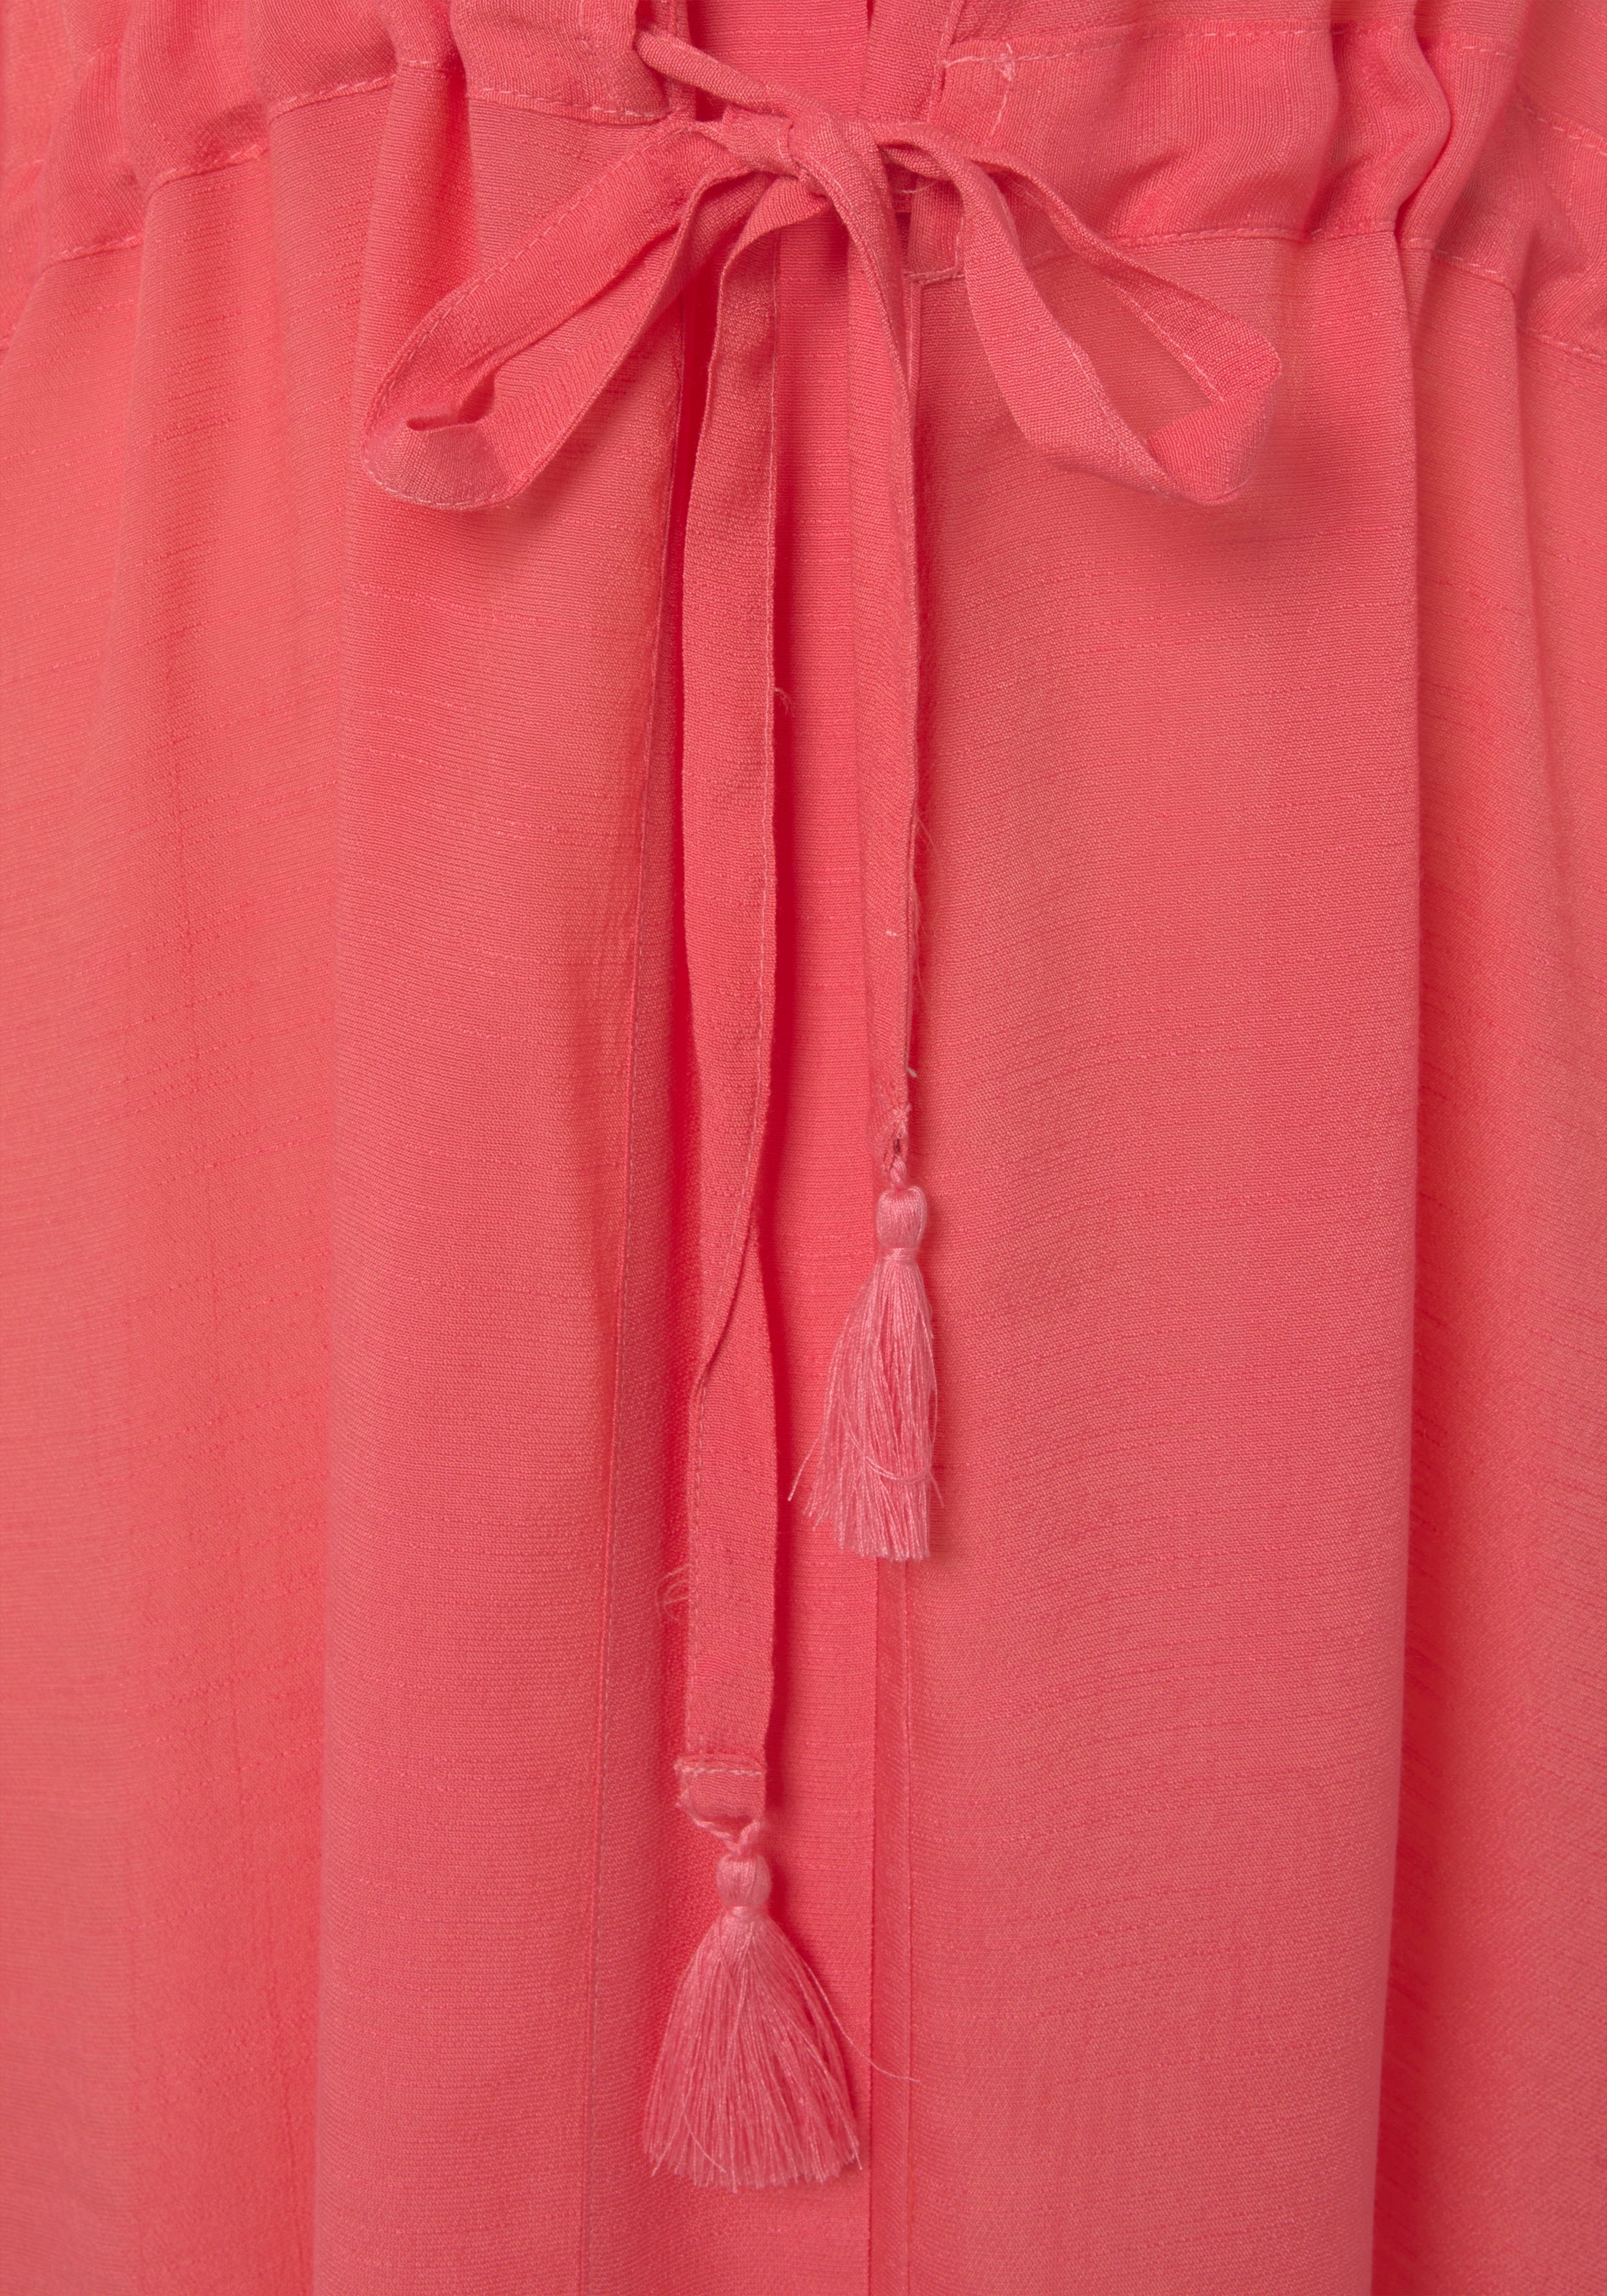 LASCANA Strandkleid, im Kimono-Style zum Binden, langärmliges Sommerkleid, Kaftan